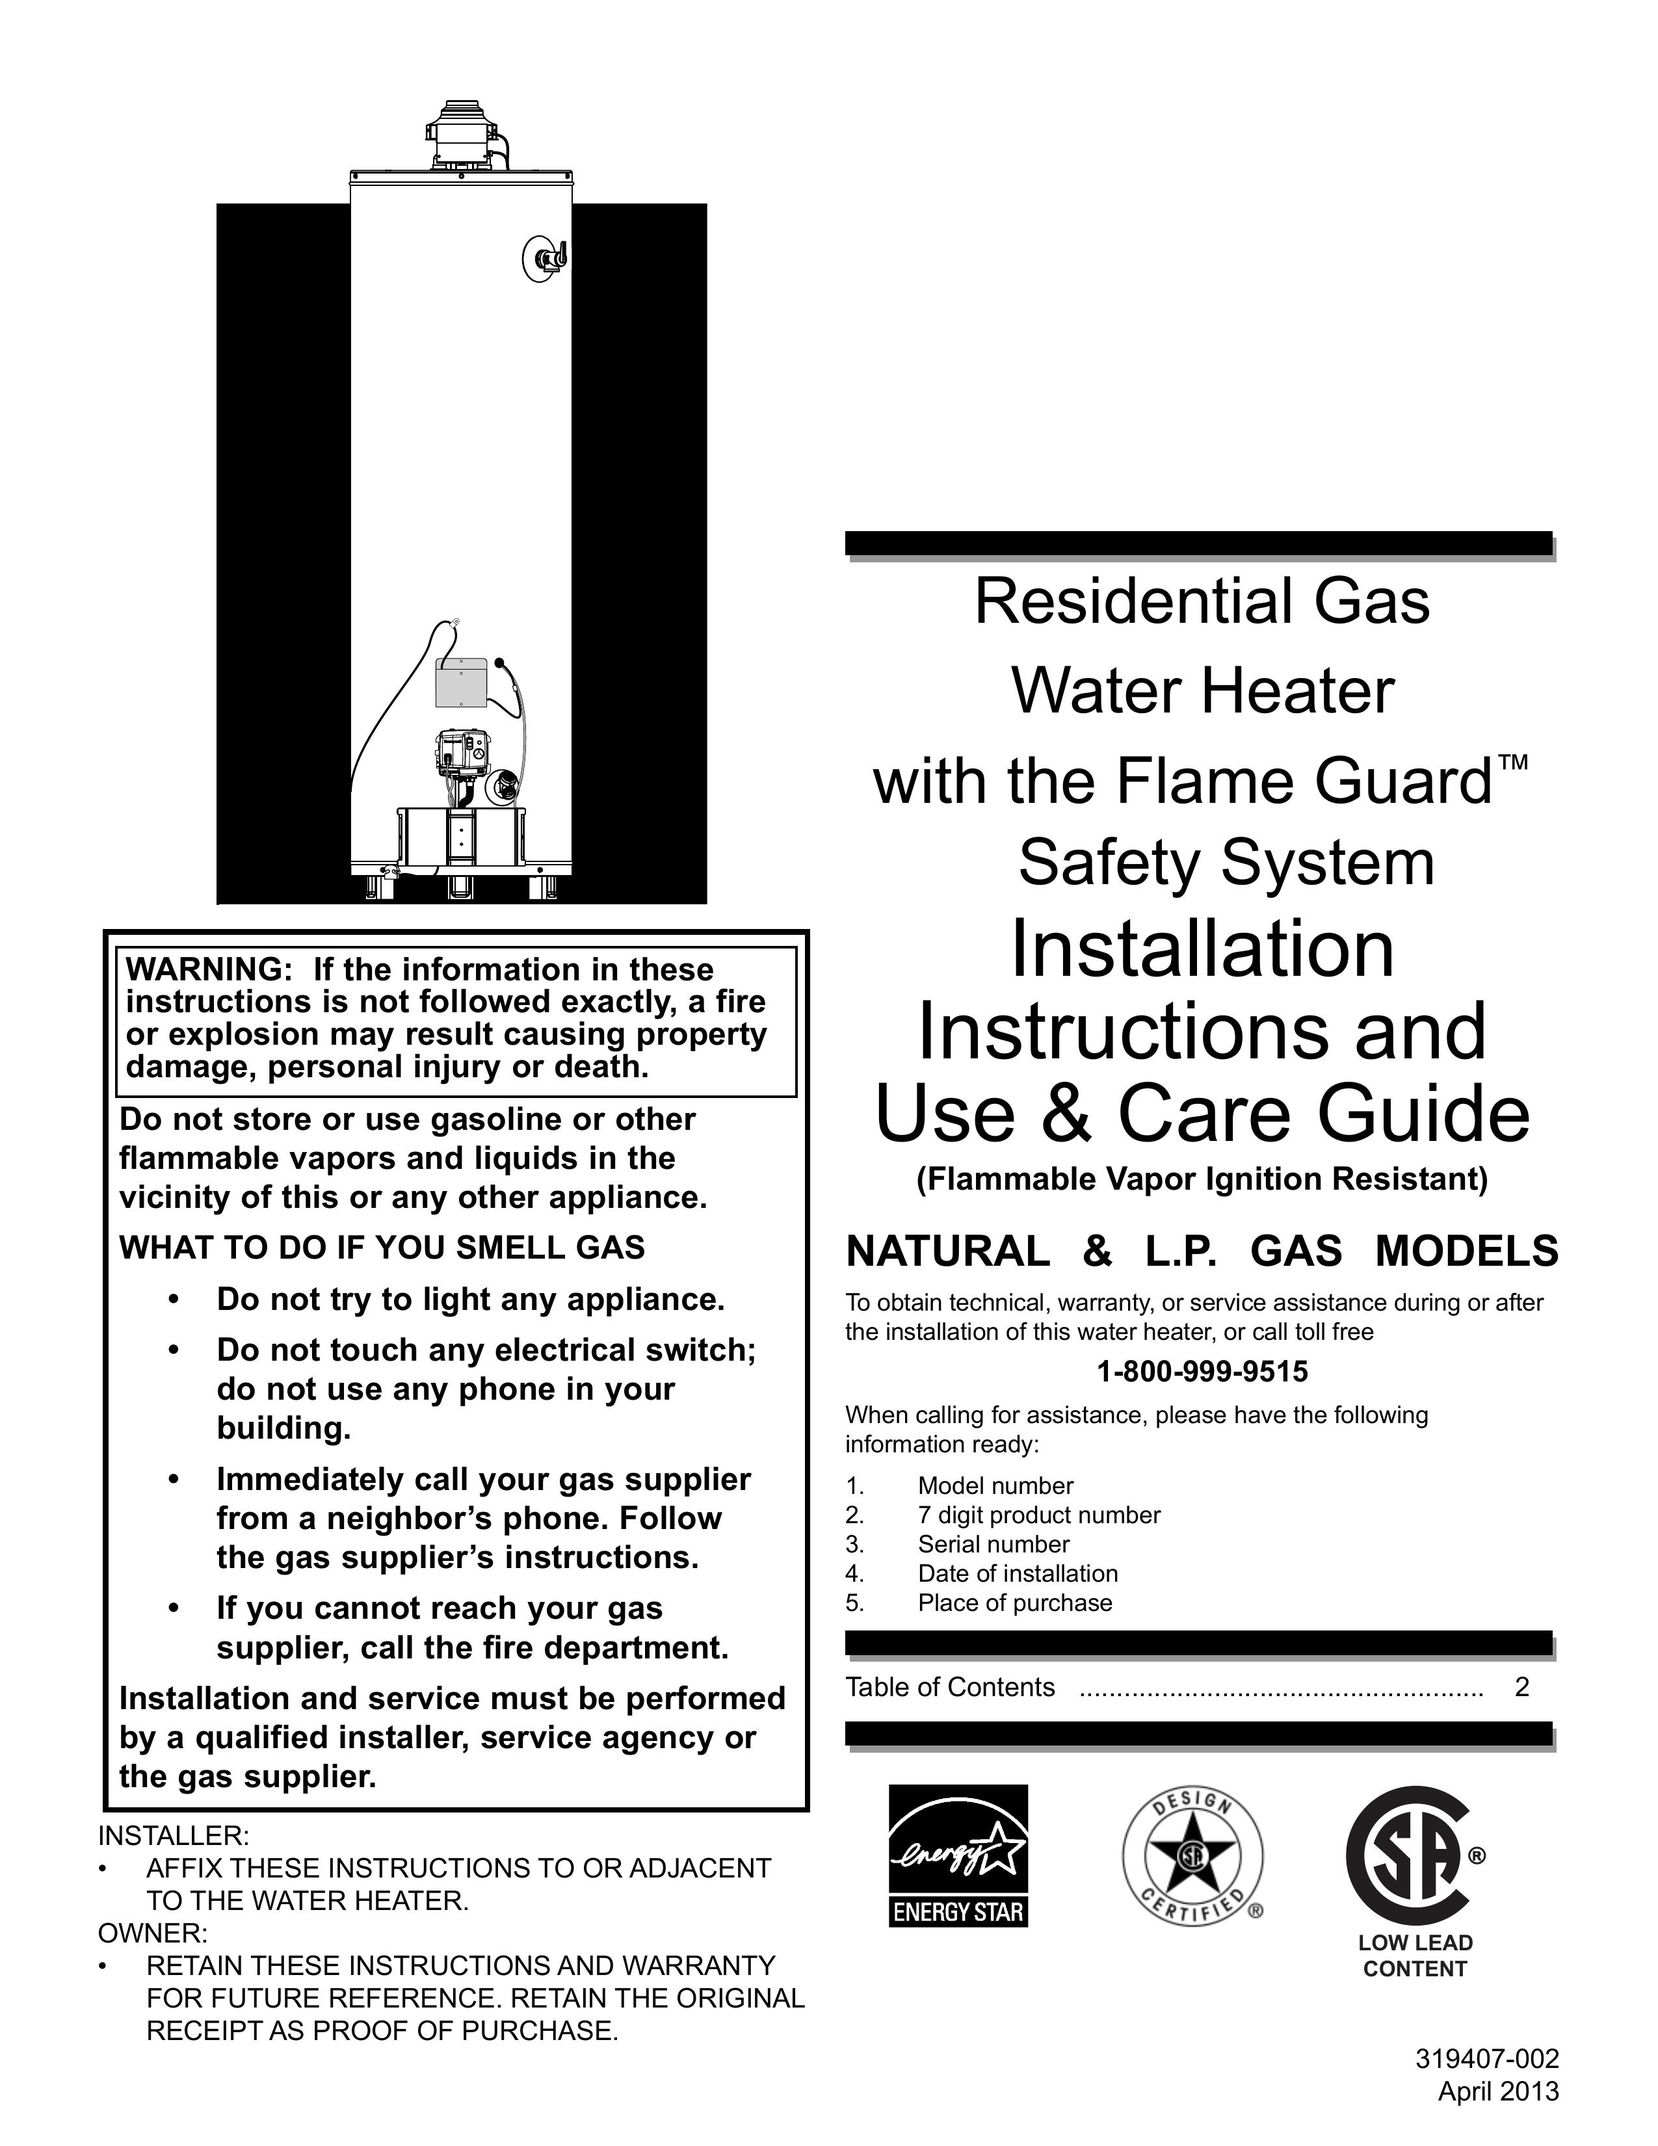 American Water Heater 319407-002 Water Heater User Manual